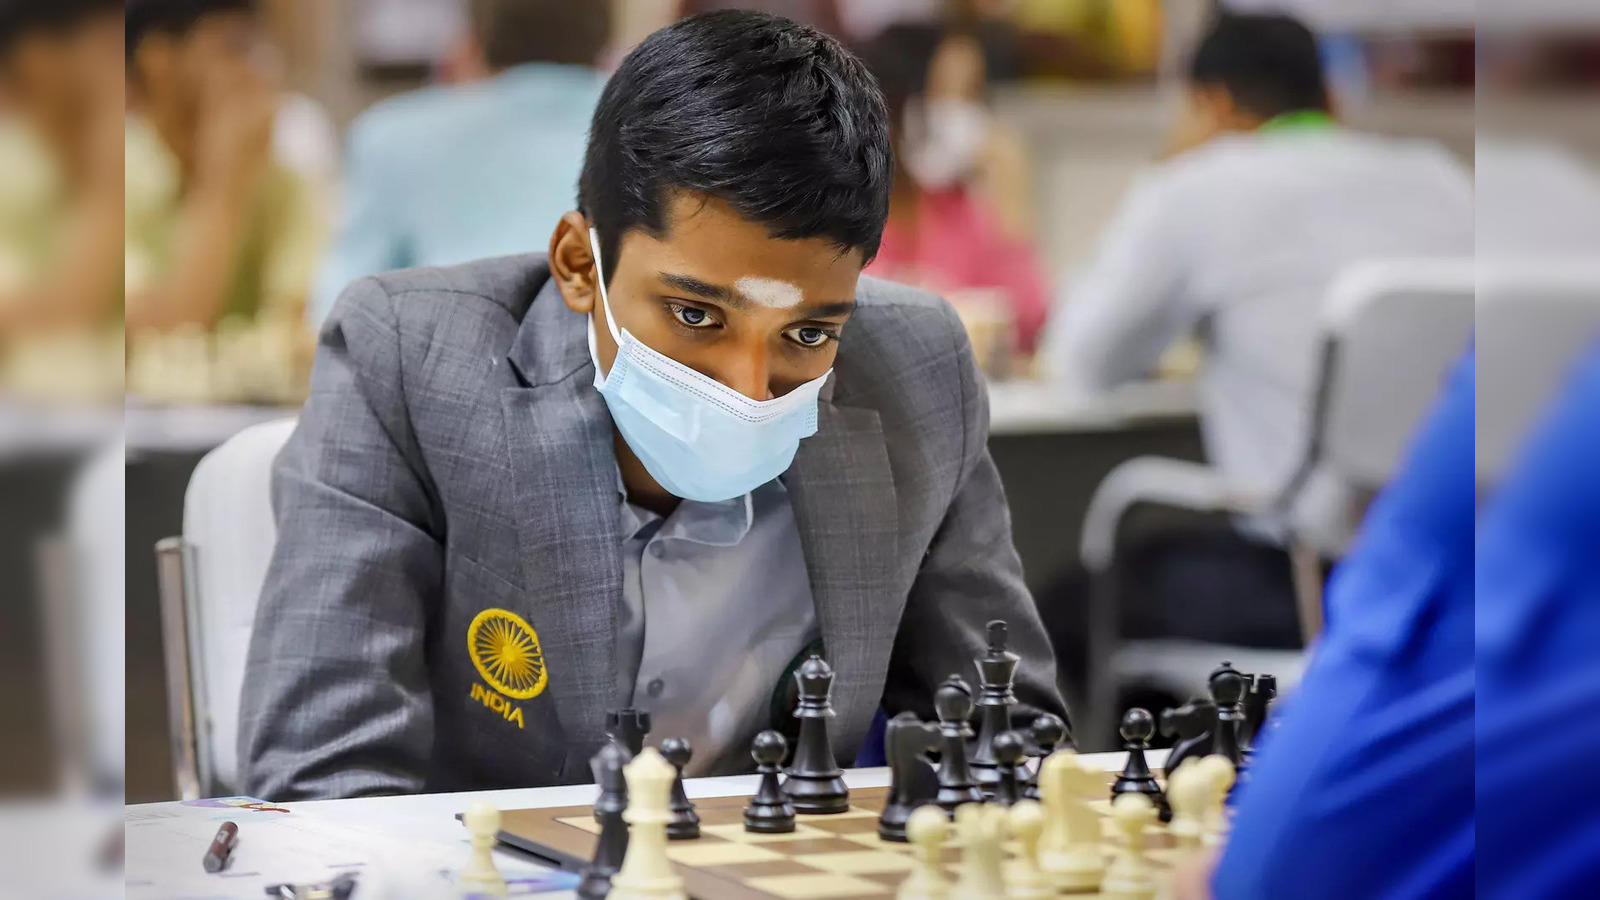 V Pranav: Chennai lad Pranav becomes India's 75th Grandmaster